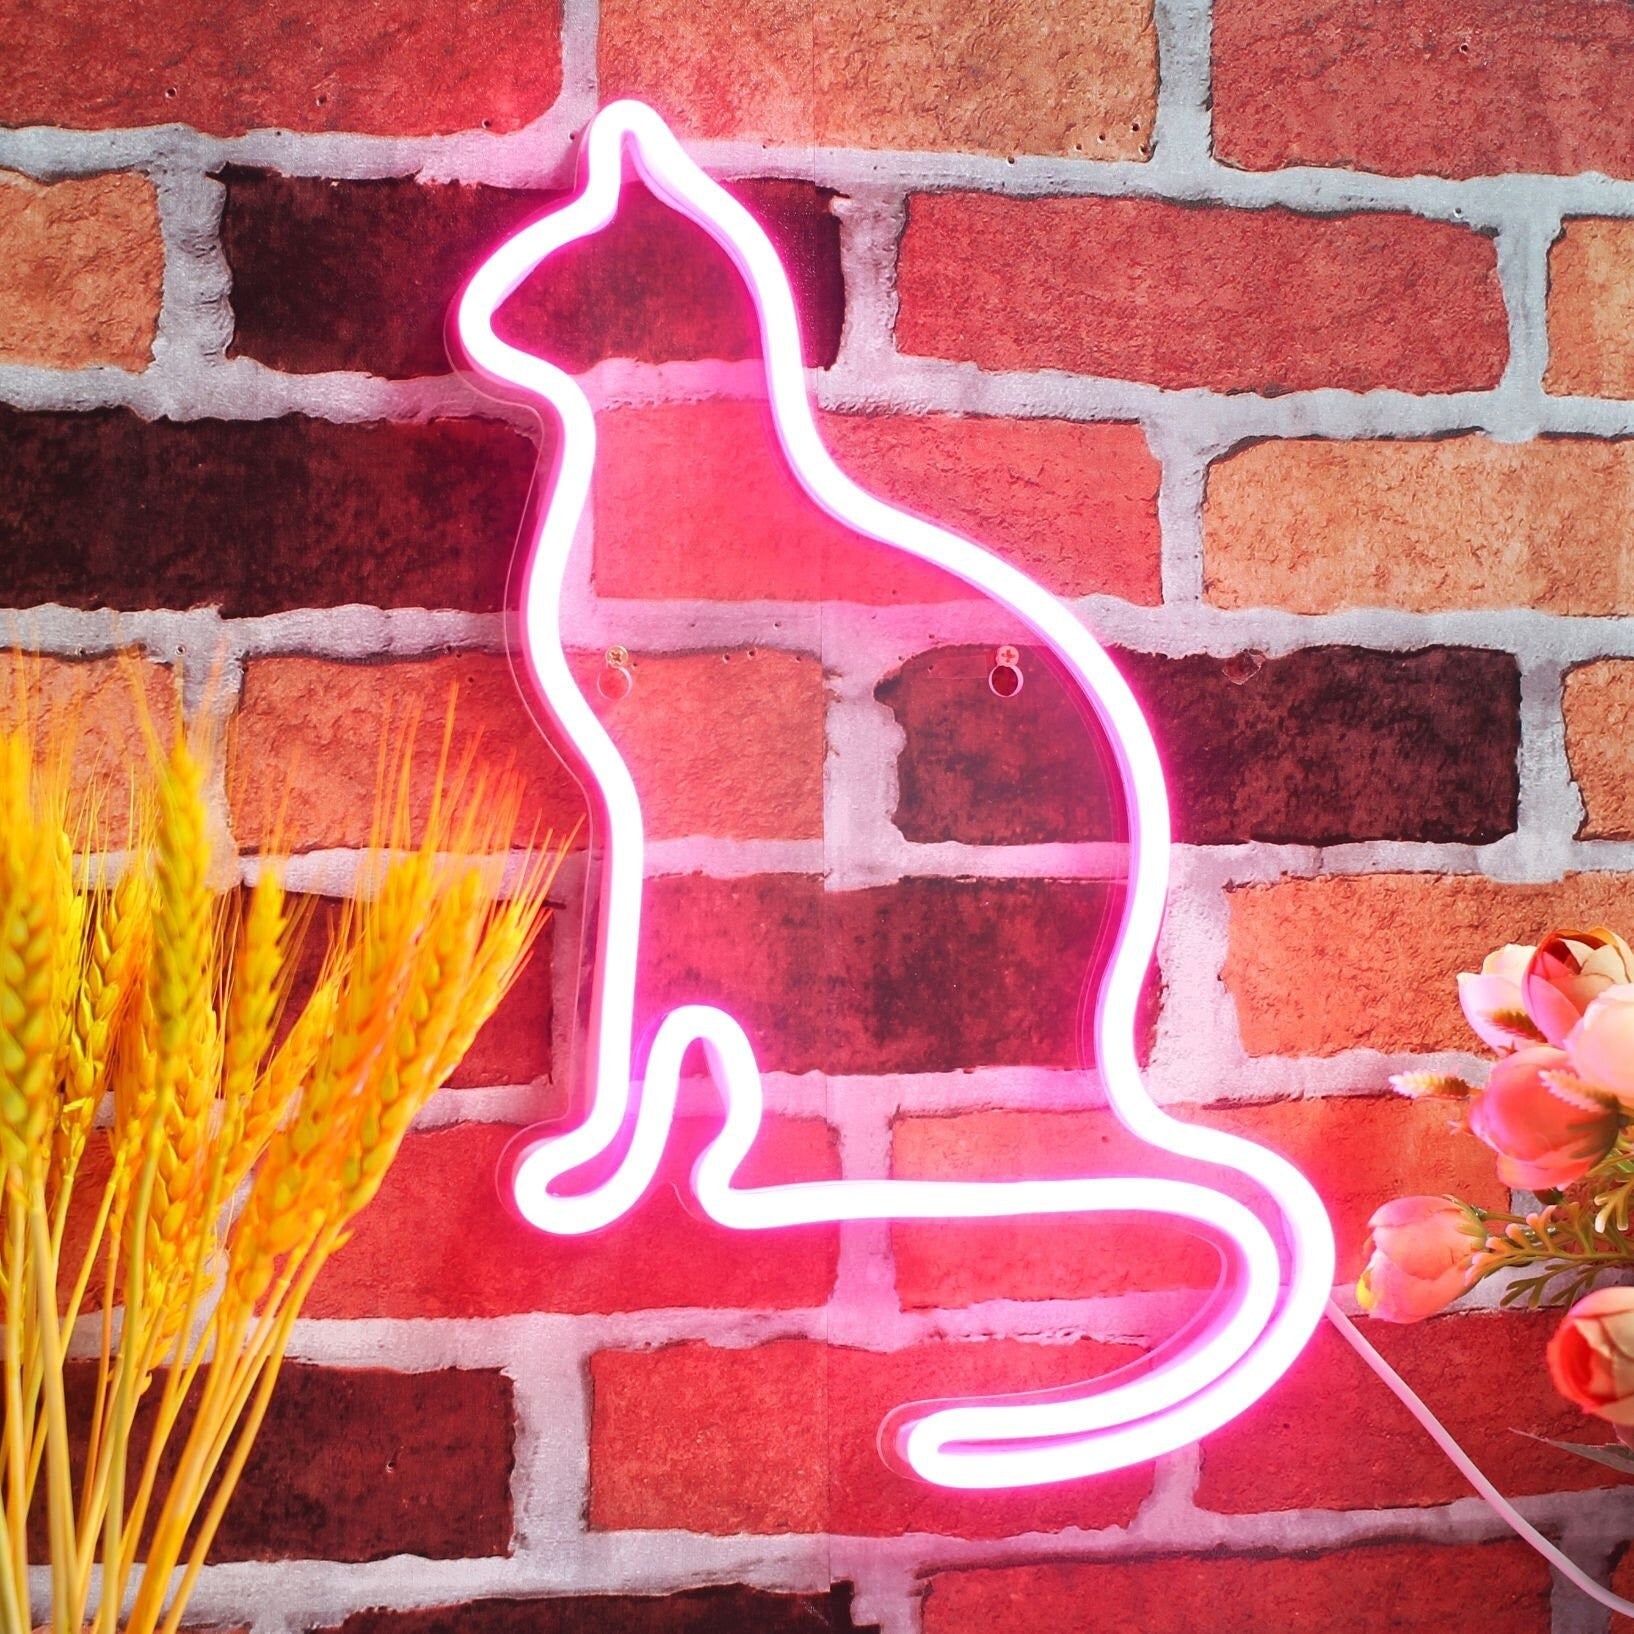 NEONIP-100% Handmade Cute Cat LED Neon Sign